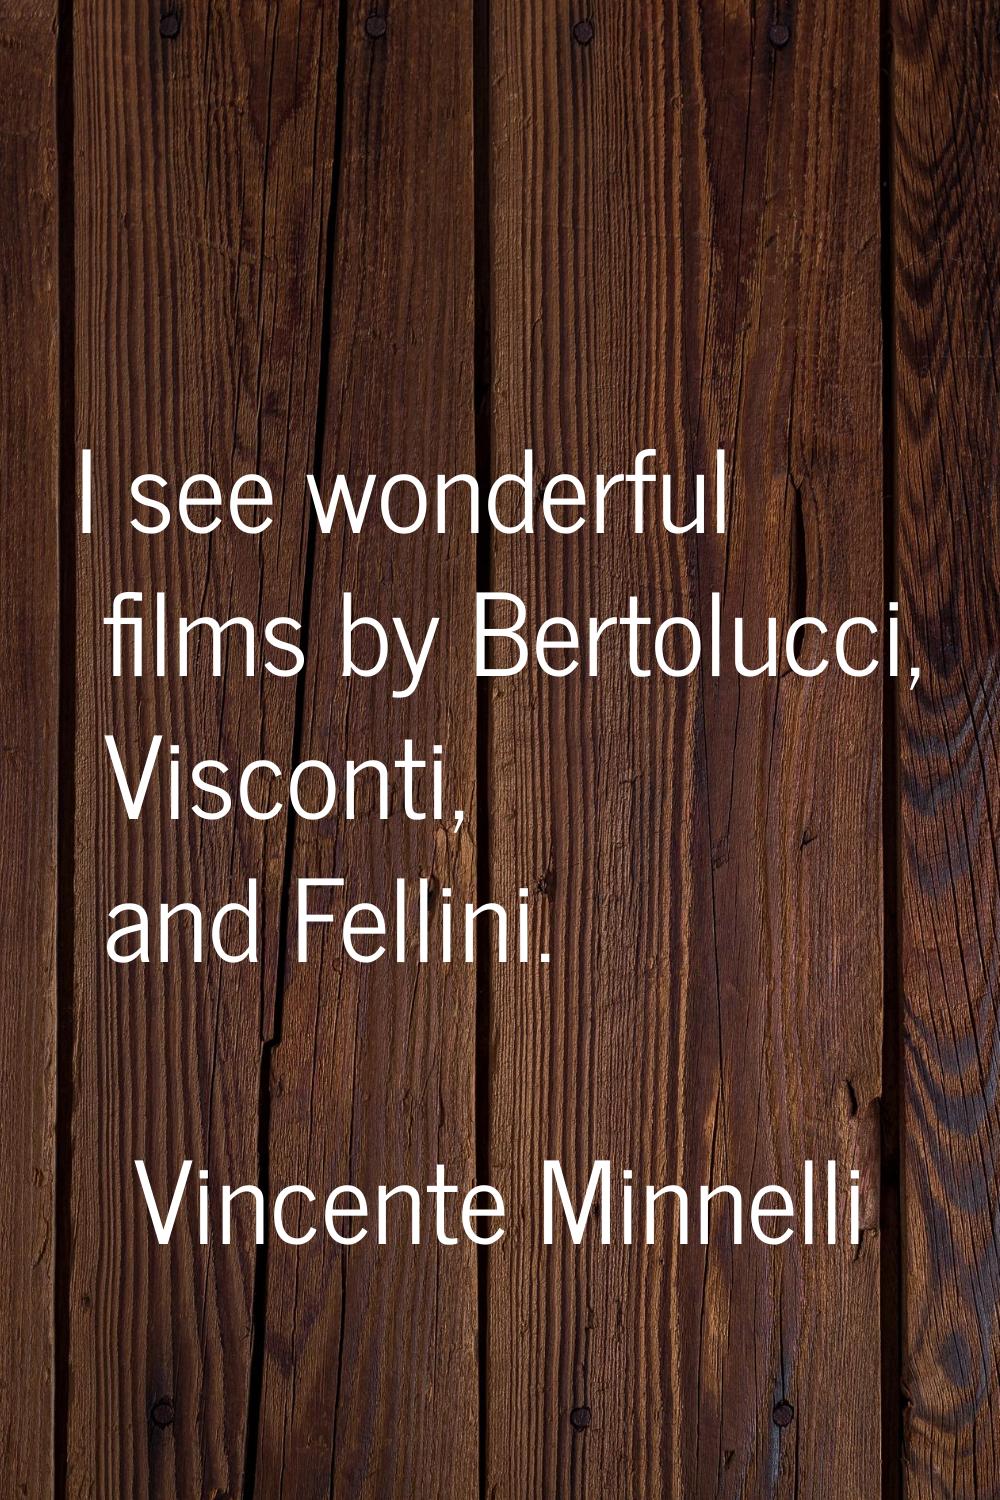 I see wonderful films by Bertolucci, Visconti, and Fellini.